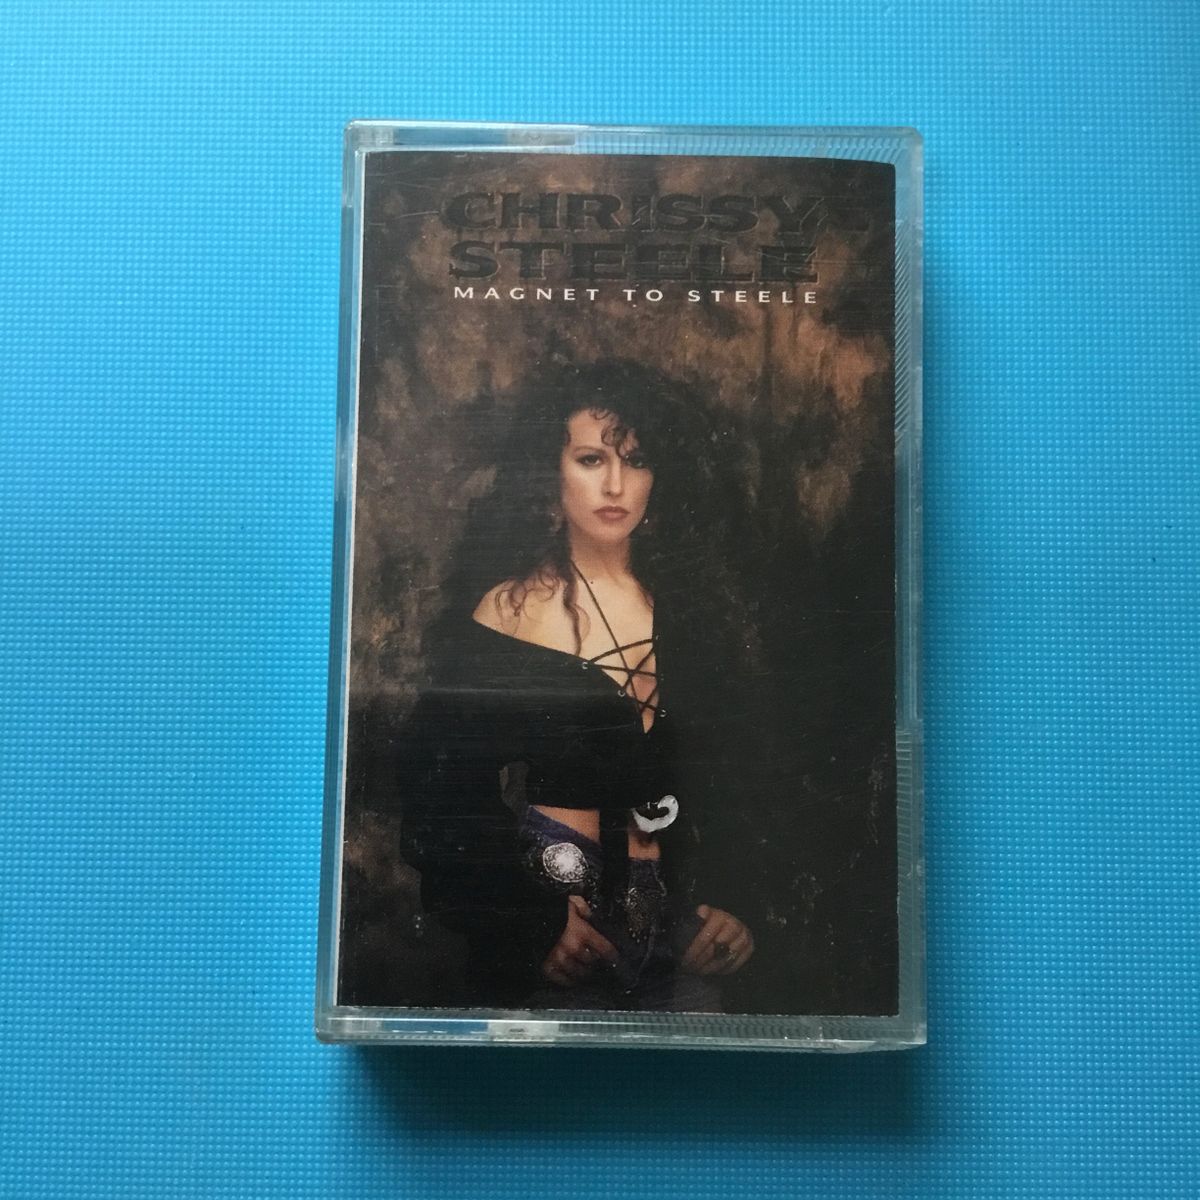 CHRISSY STEELE - Magnet To Steele - 1991 Cassette Album